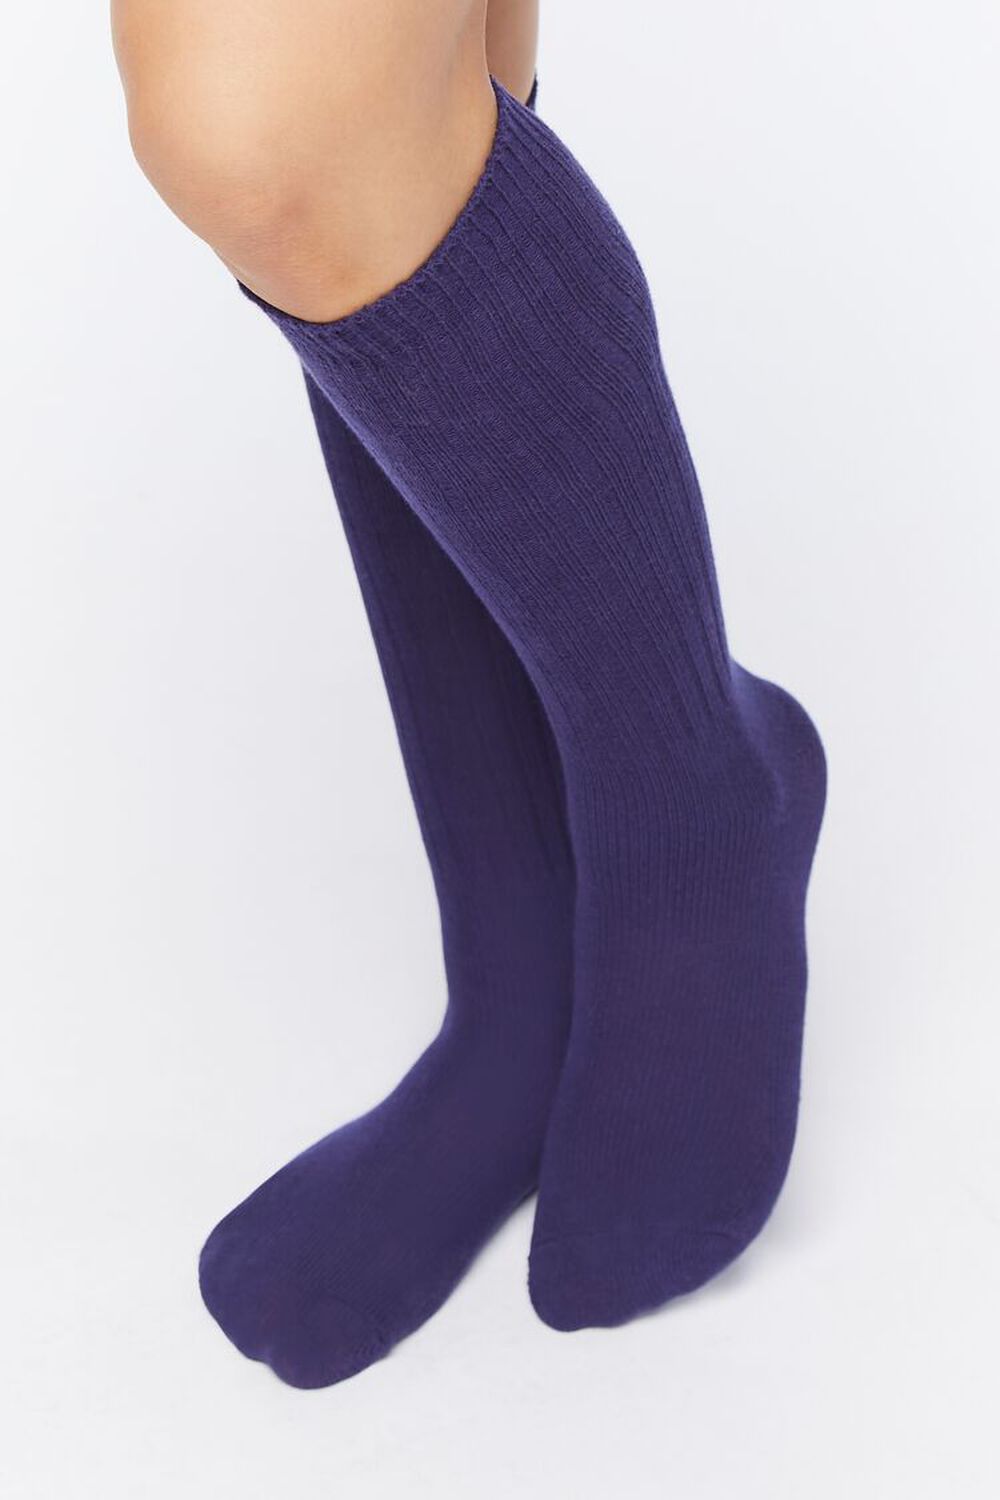 NAVY Ribbed Knee-High Socks, image 1